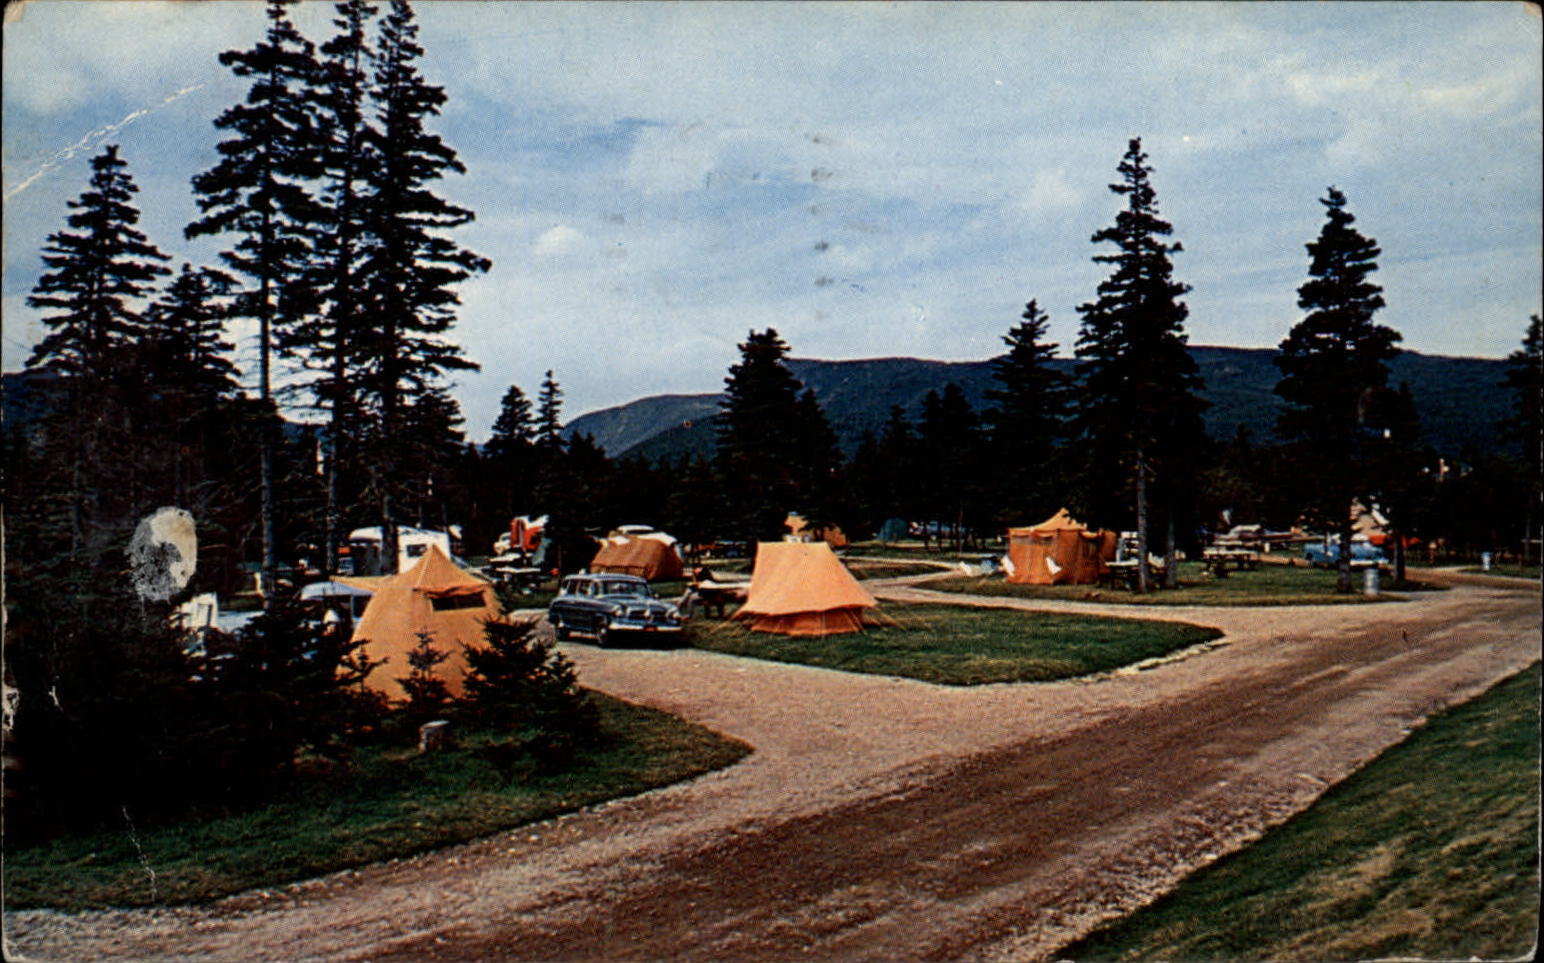 Camp Grounds Ingonish Cape Breton Nova Scotia Canada ~ 1959 vintage postcard